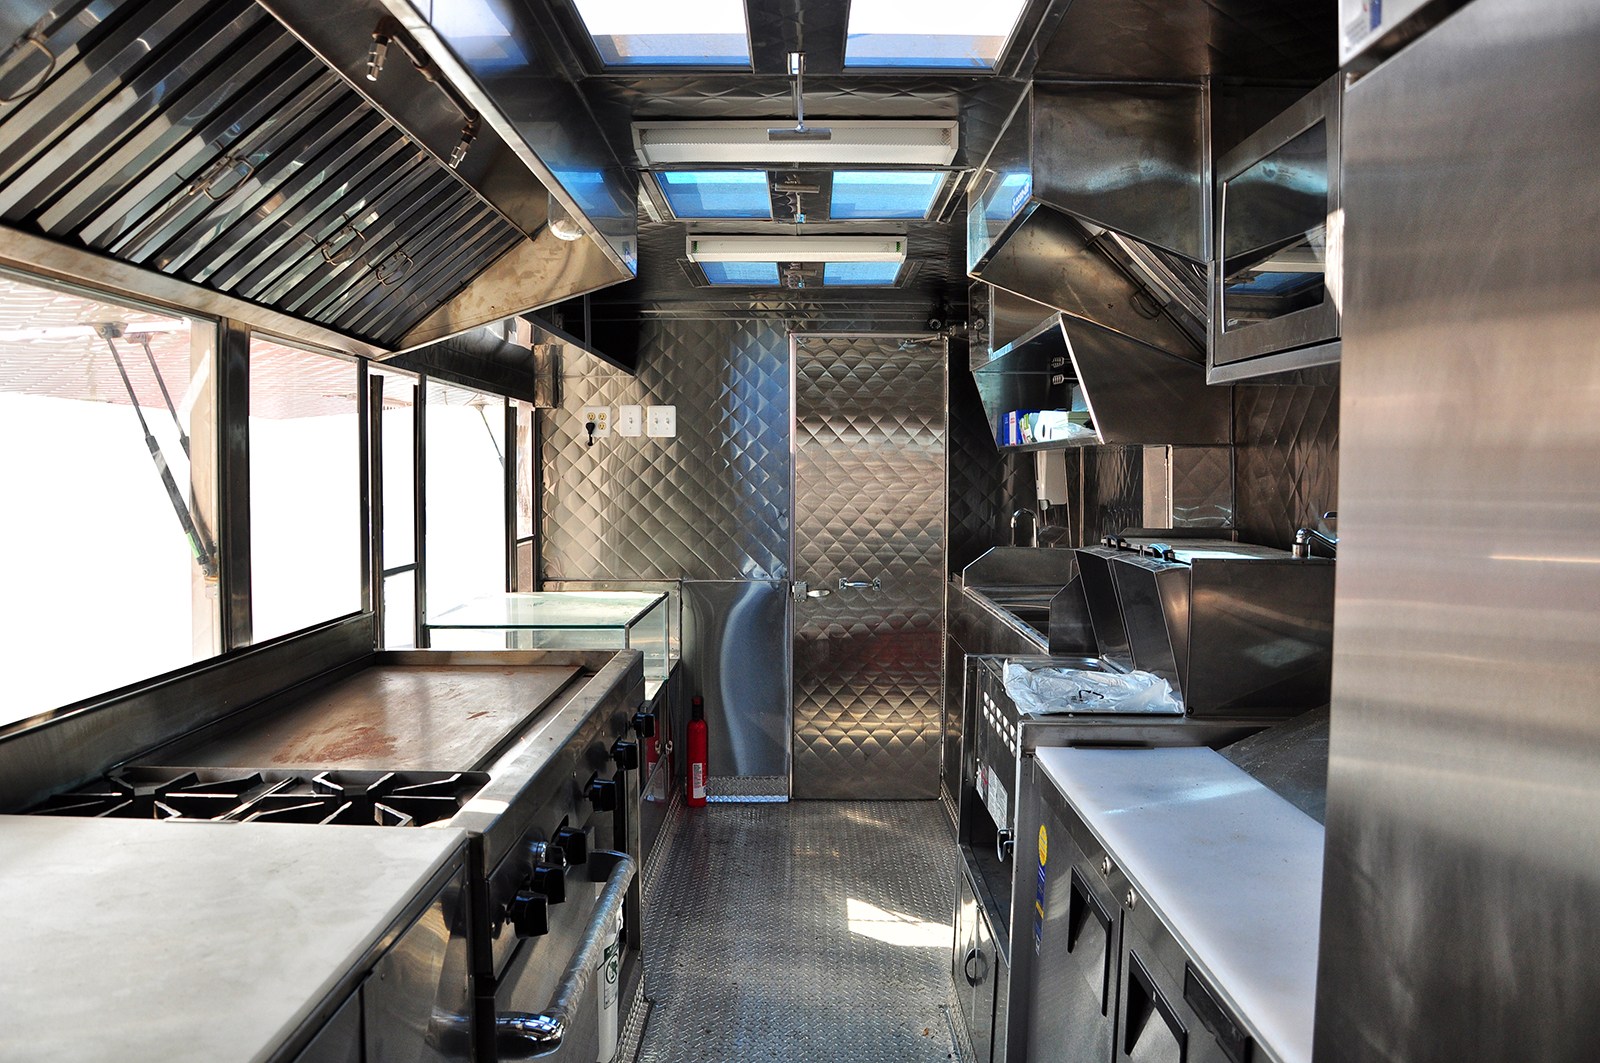 Mobile Kitchen Equipment Inside Food Truck